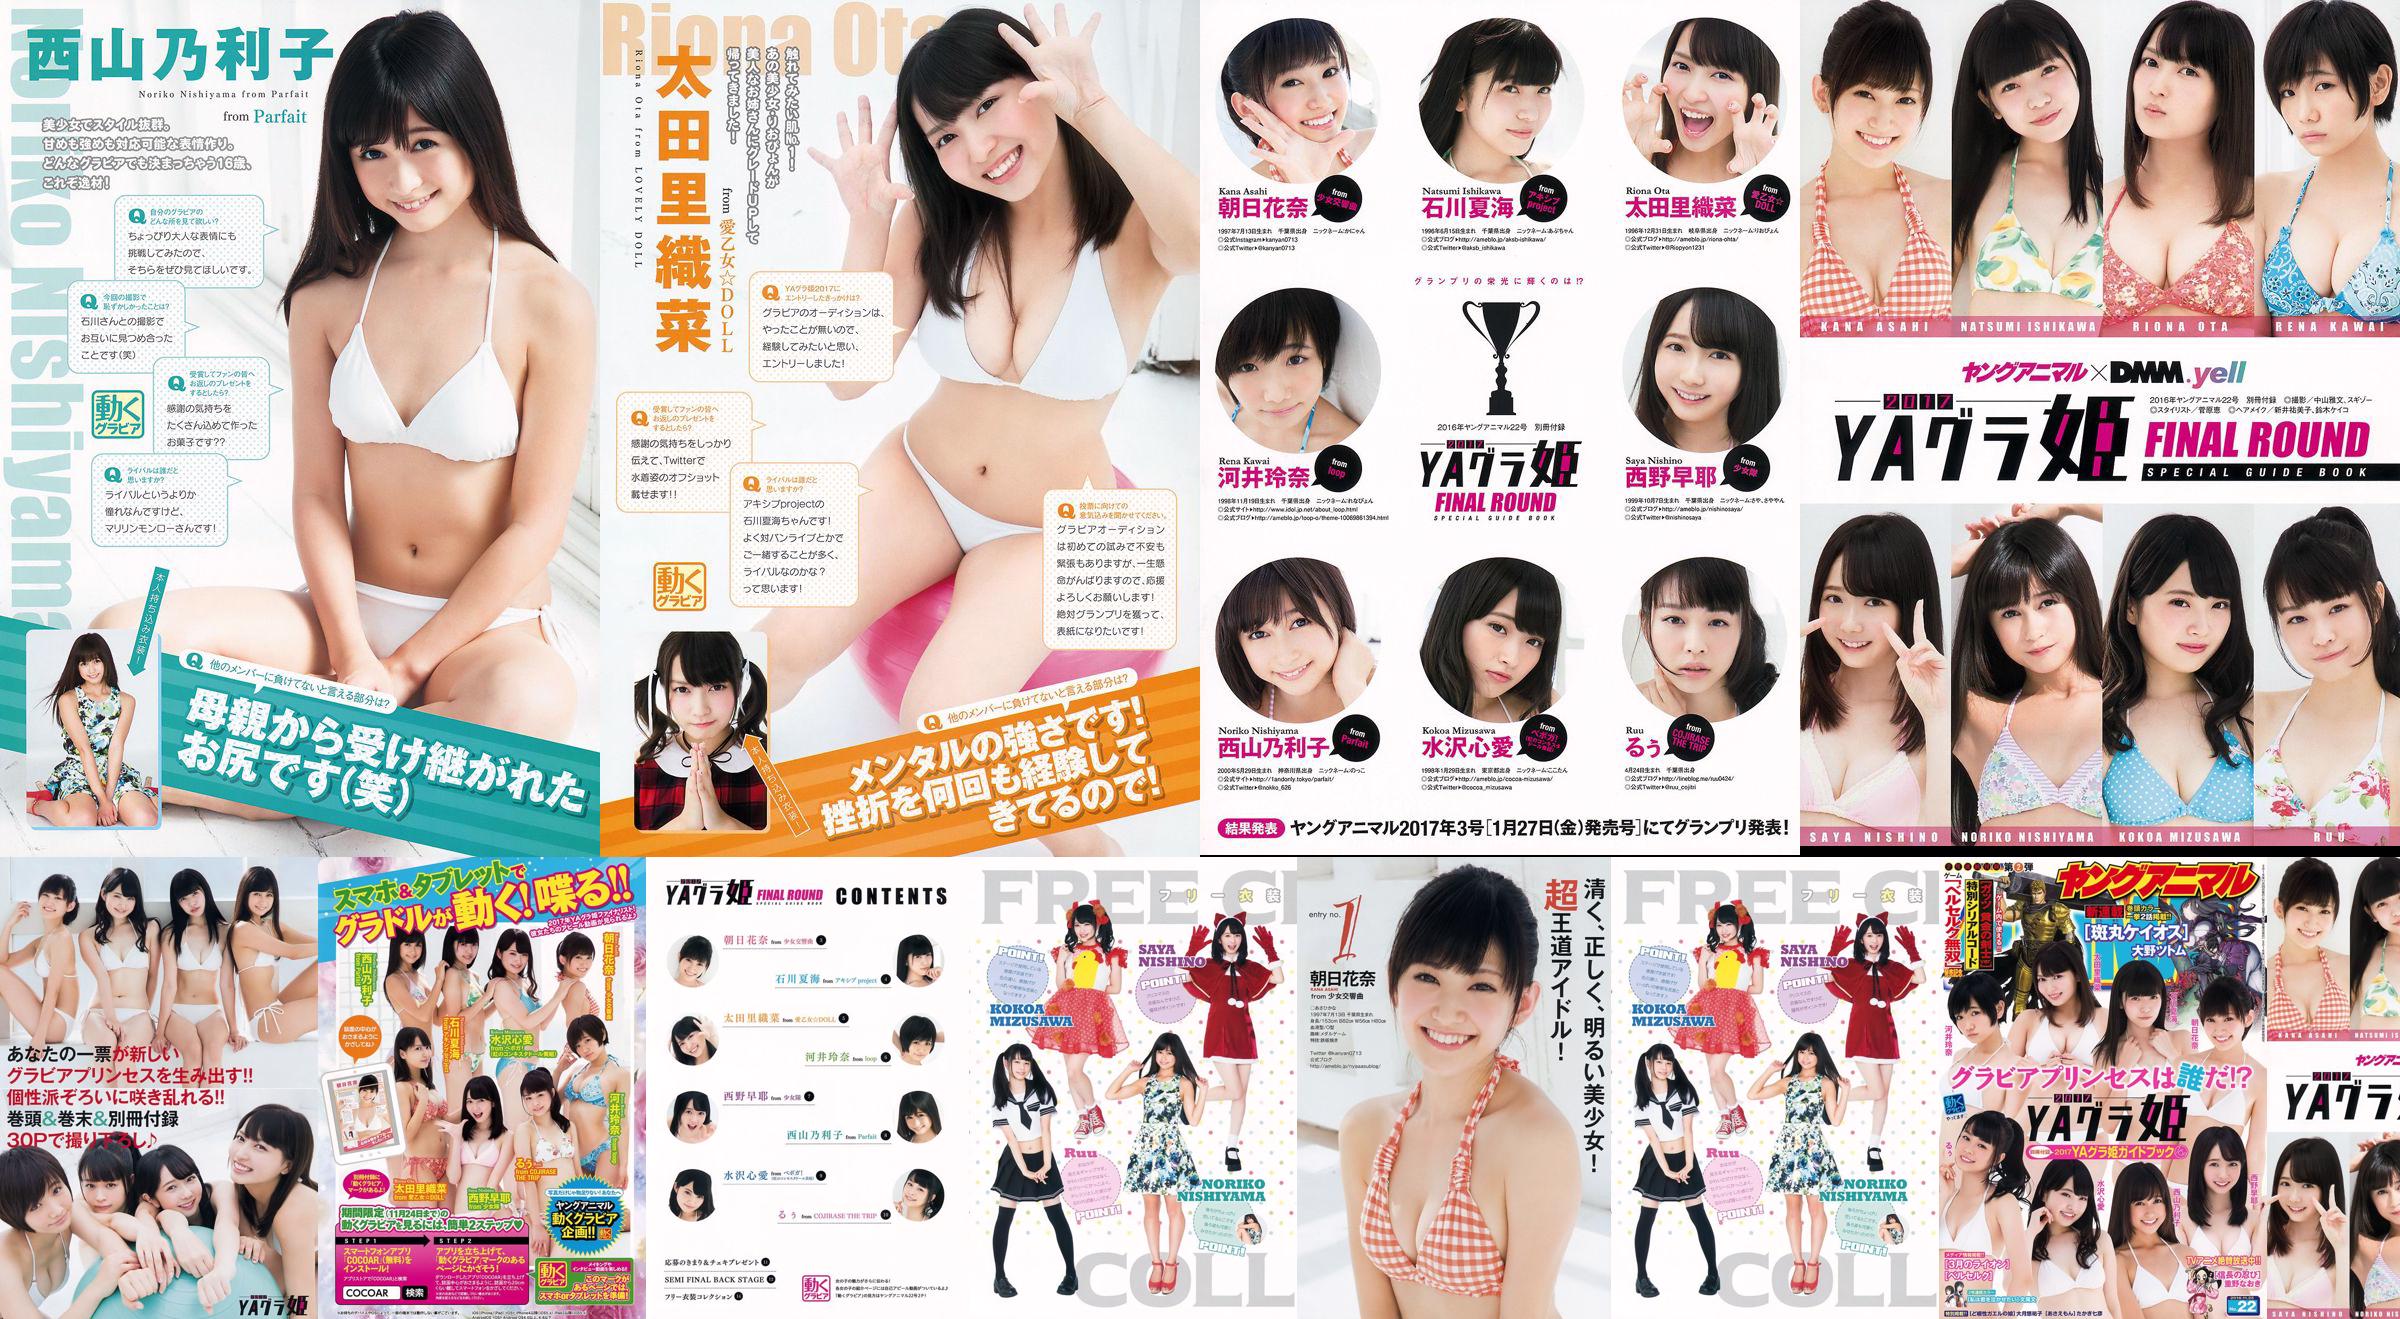 Mizusawa Beloved, Nishiyama Noriko, Nishino Haya, Kawai Reina, Ota Rina, Ishikawa Natsumi, Asahi Hana [น้องสัตว์] นิตยสารภาพถ่ายฉบับที่ 22 ประจำปี 2559 No.d3b336 หน้า 6